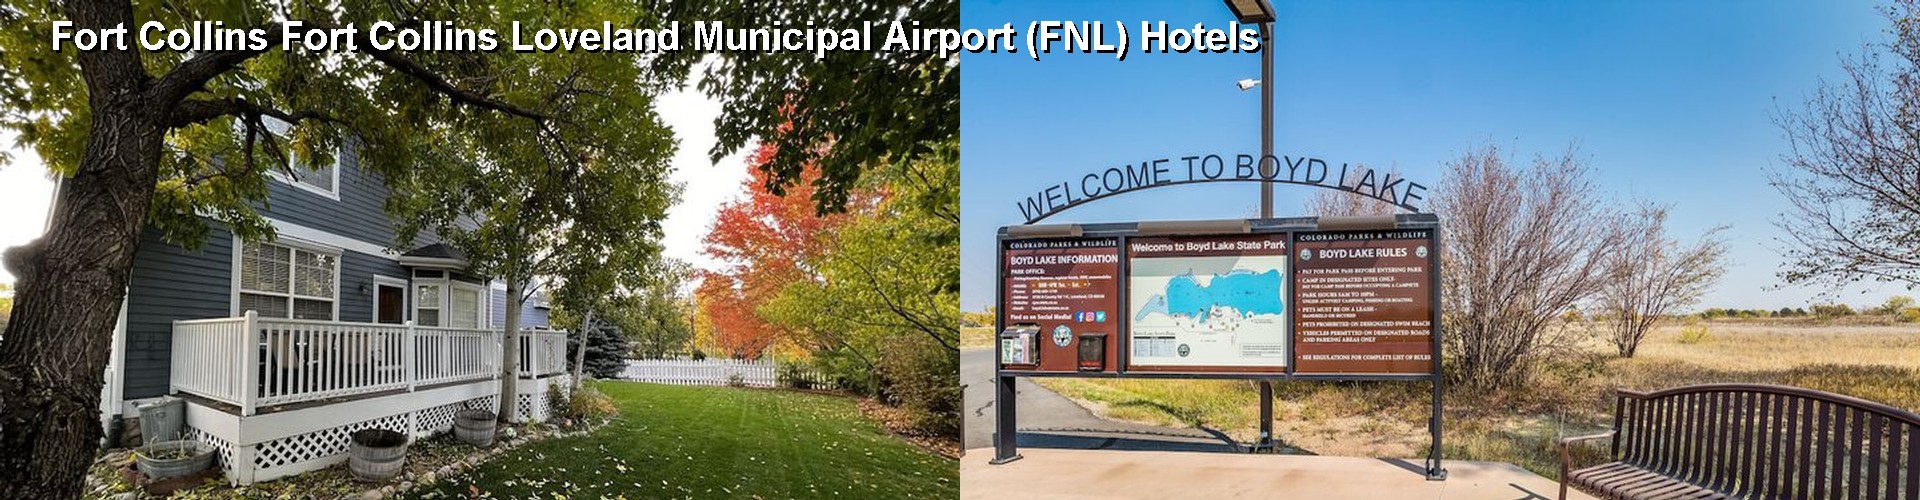 5 Best Hotels near Fort Collins Fort Collins Loveland Municipal Airport (FNL)